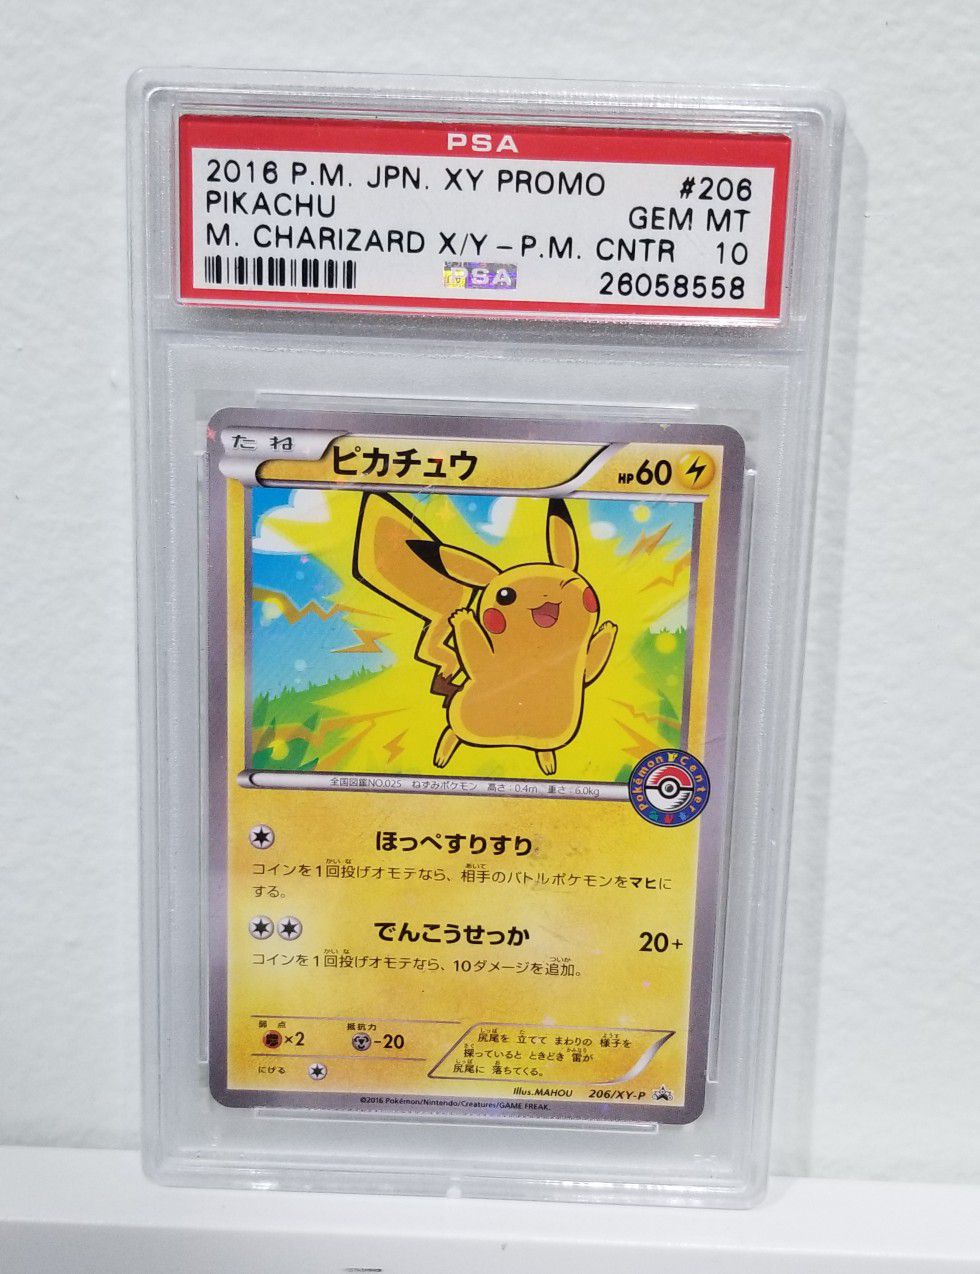 2016 XY Pikachu Promo PSA 10 Pokemon cards